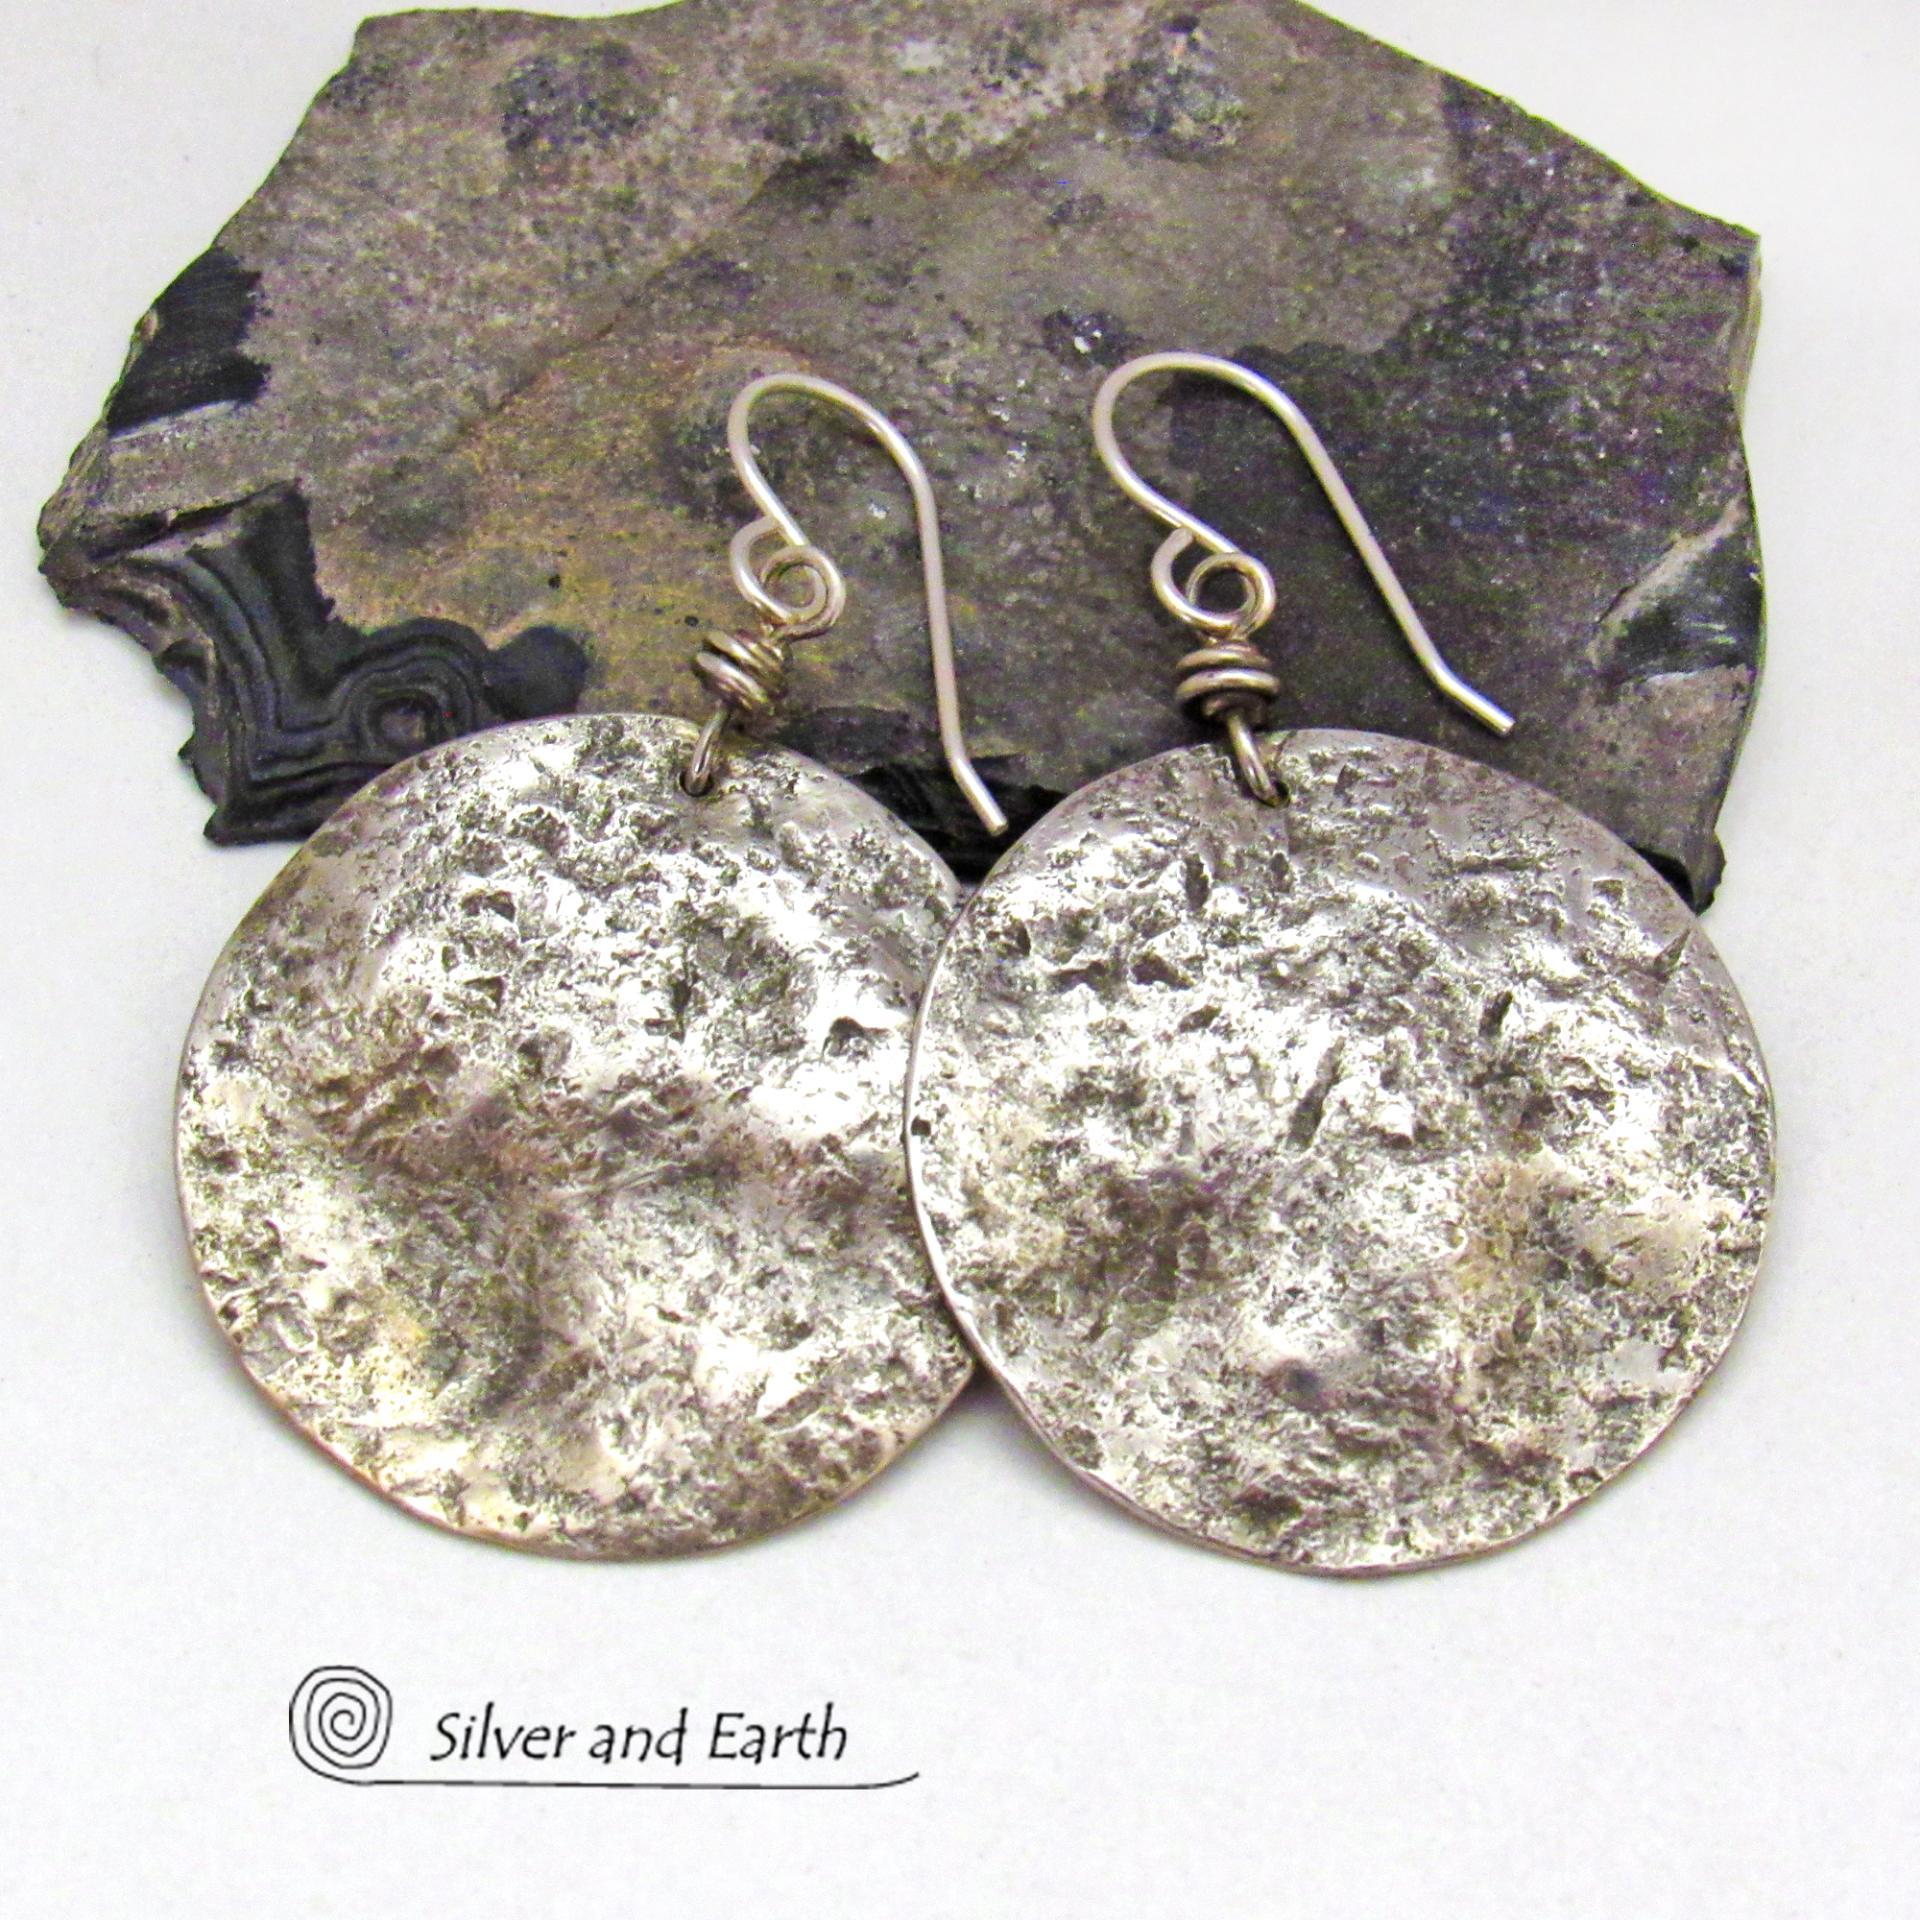 Hammered Sterling Silver Moon Earrings - Organic Earthy Silver Jewelry